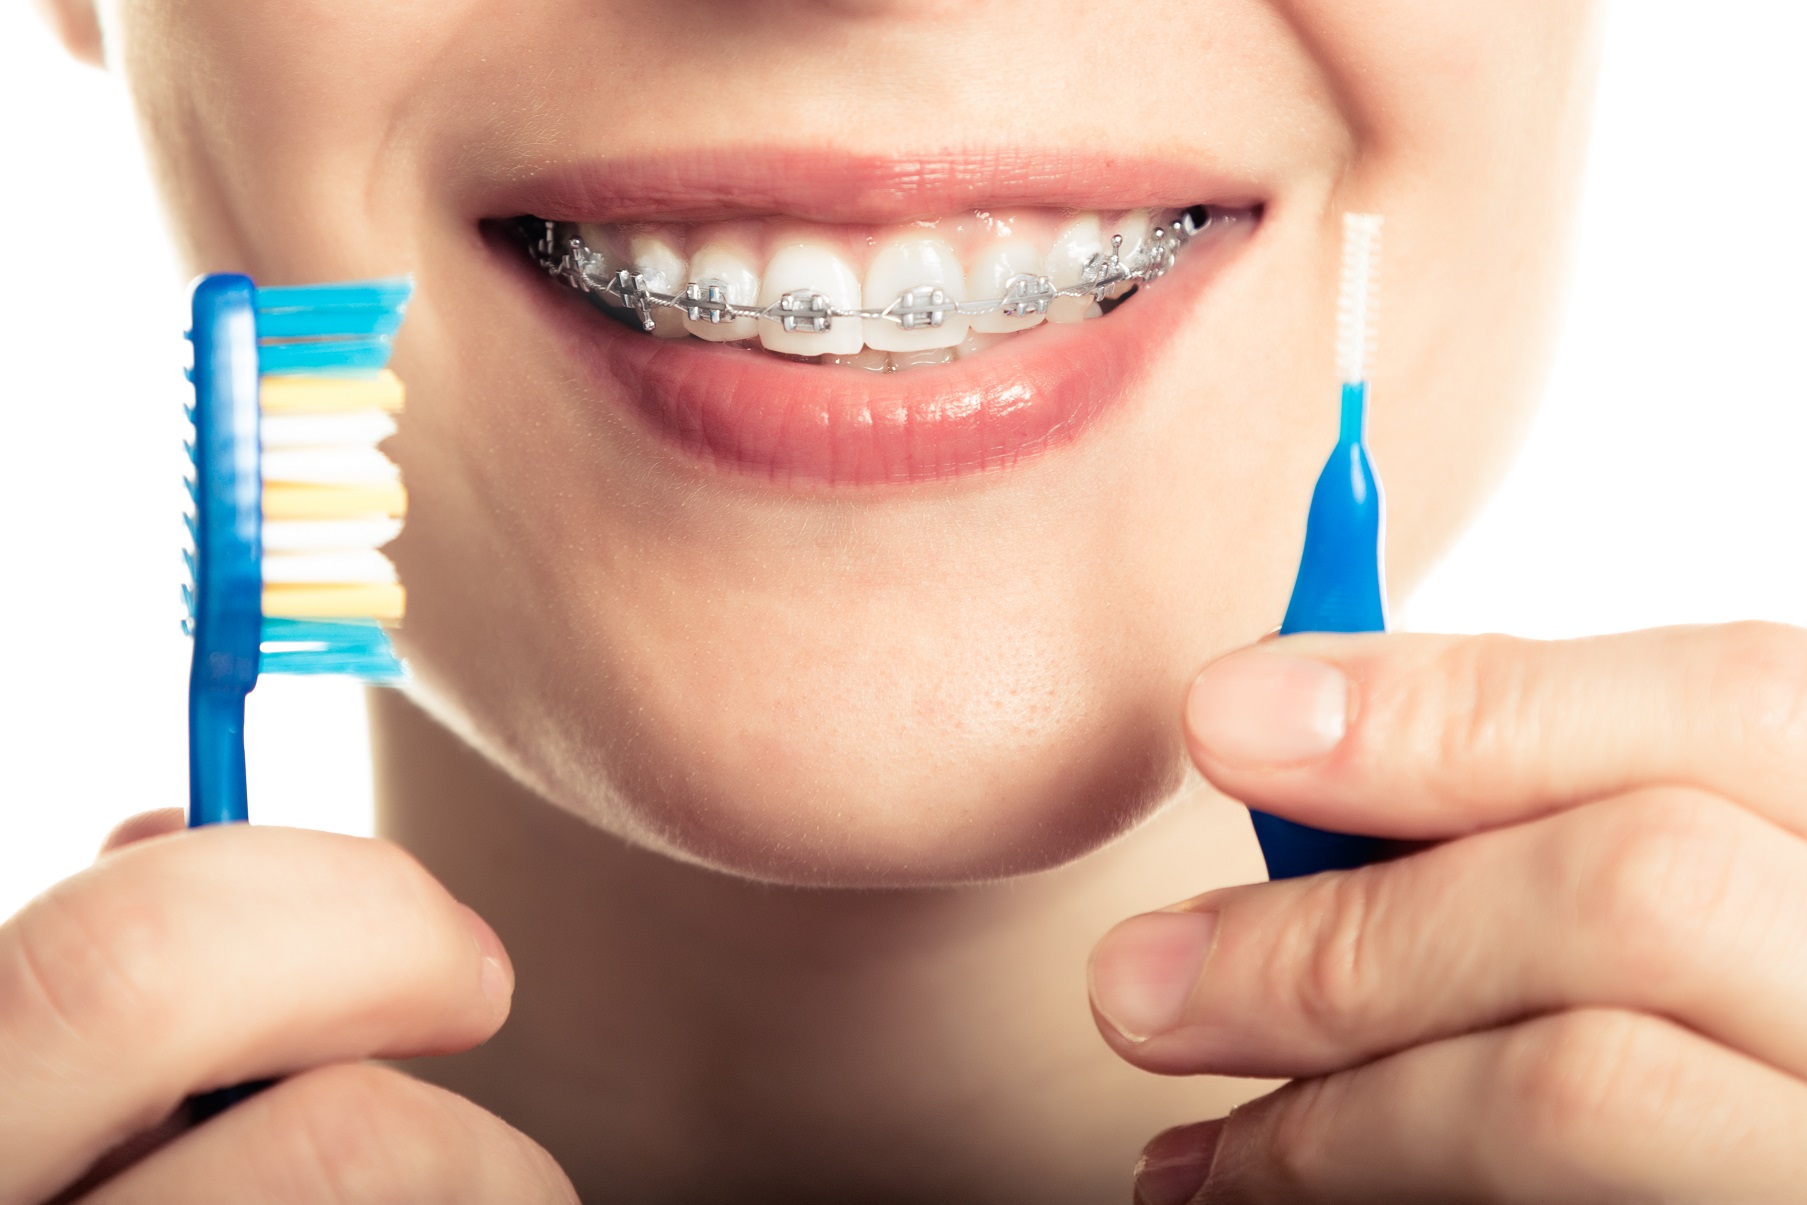 Can Braces Stain My Teeth? Bryan Hicks Orthodontics